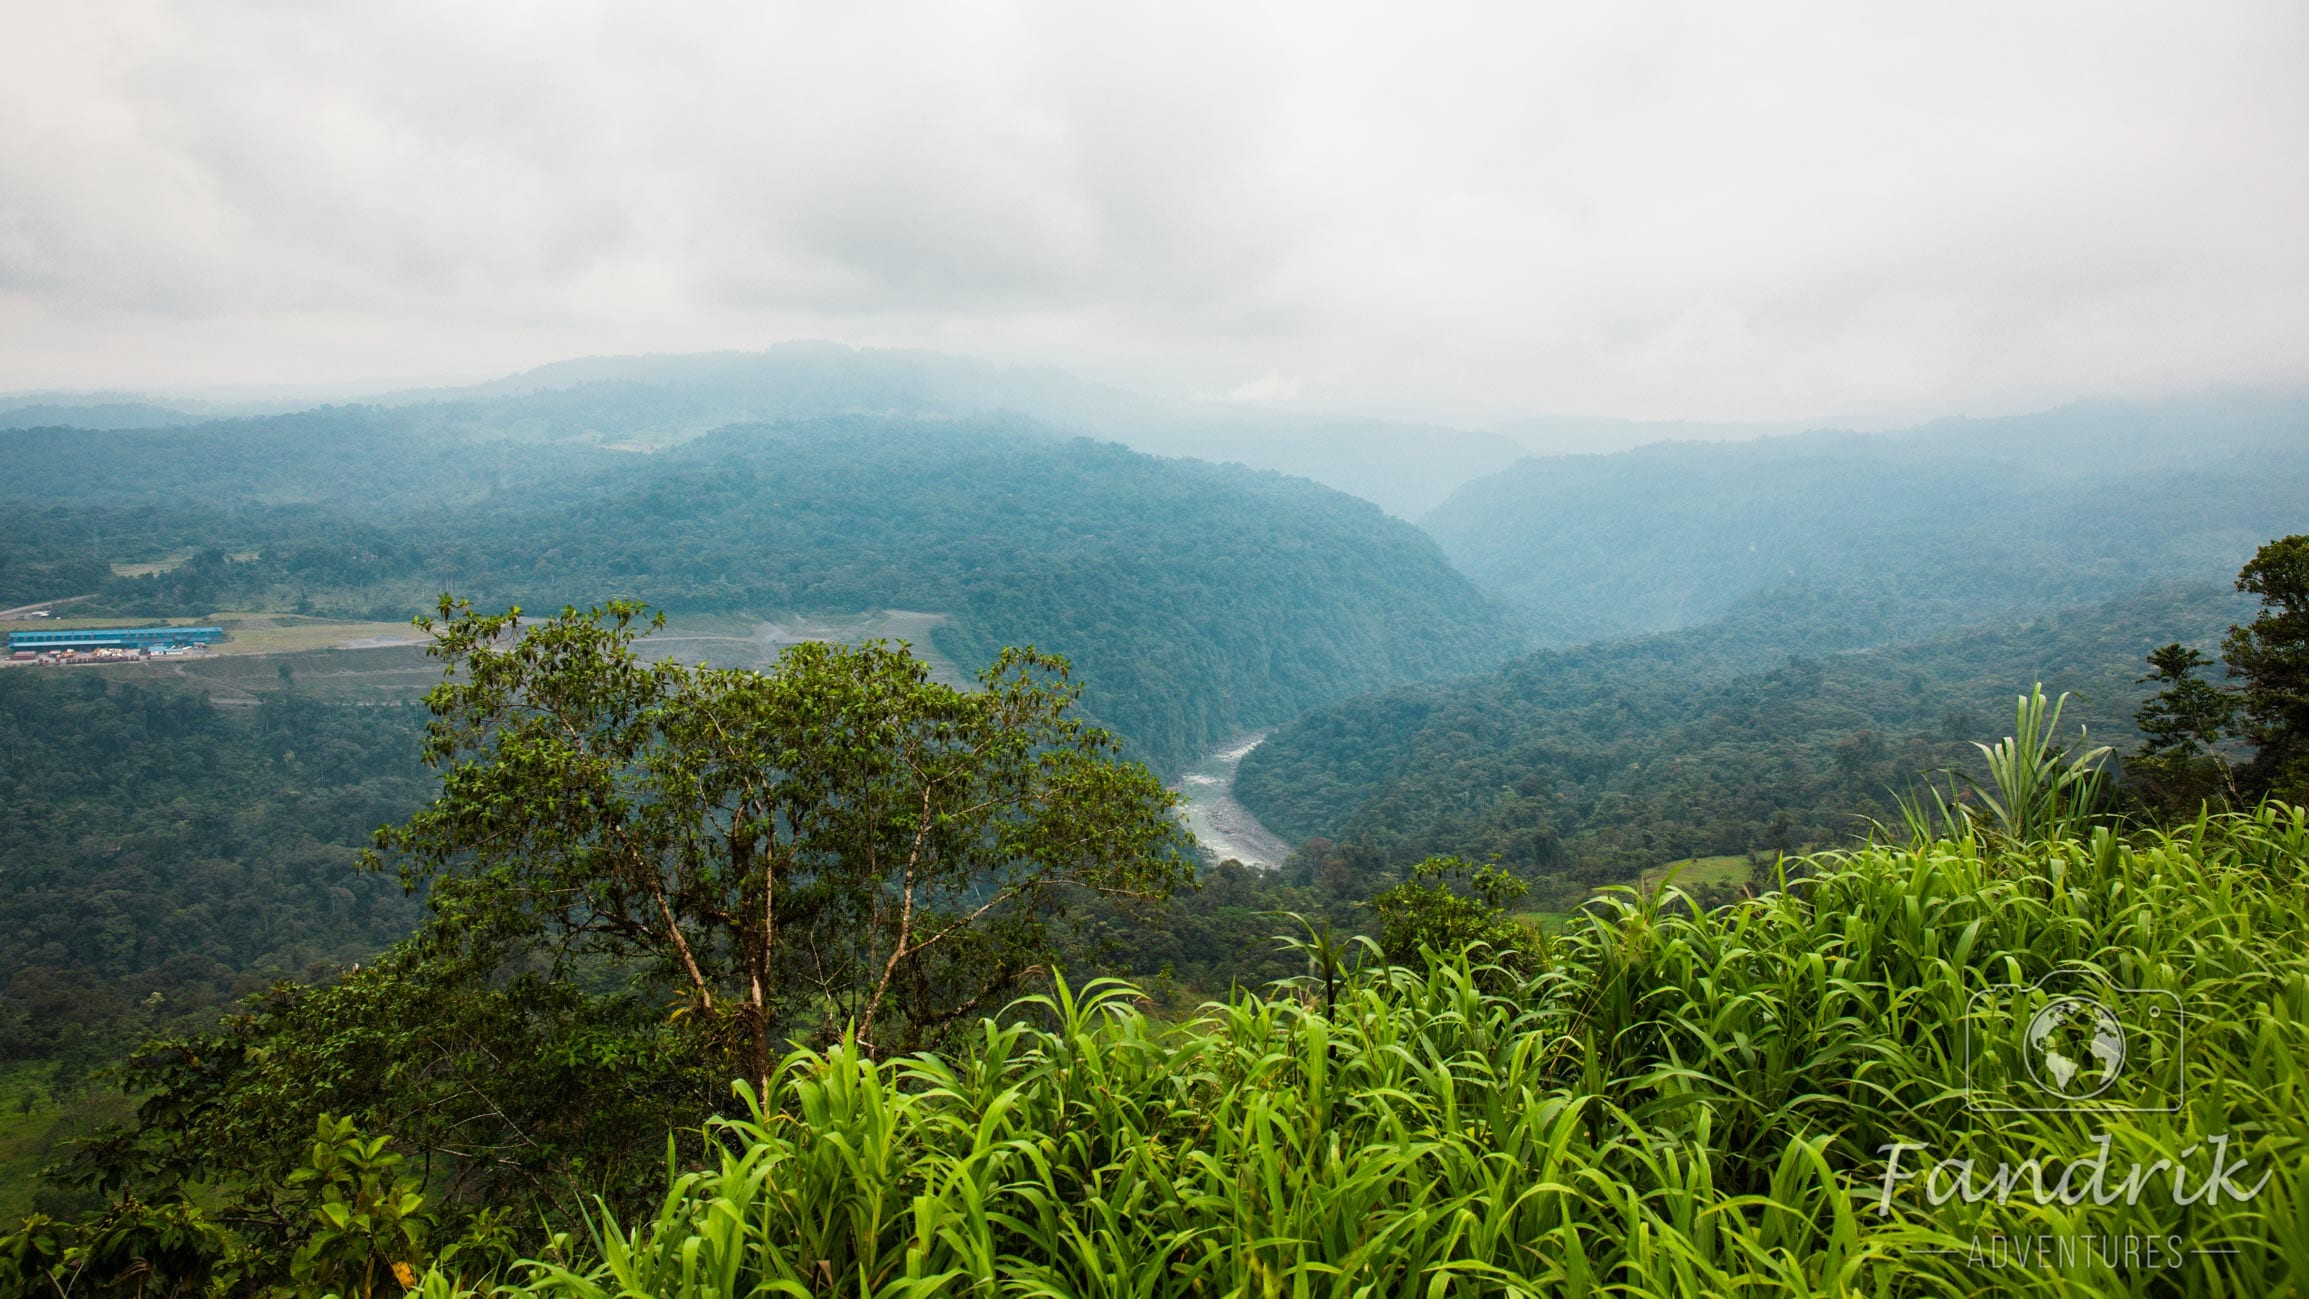 Der grüne Regenwald des Amazonas in Ecuador.